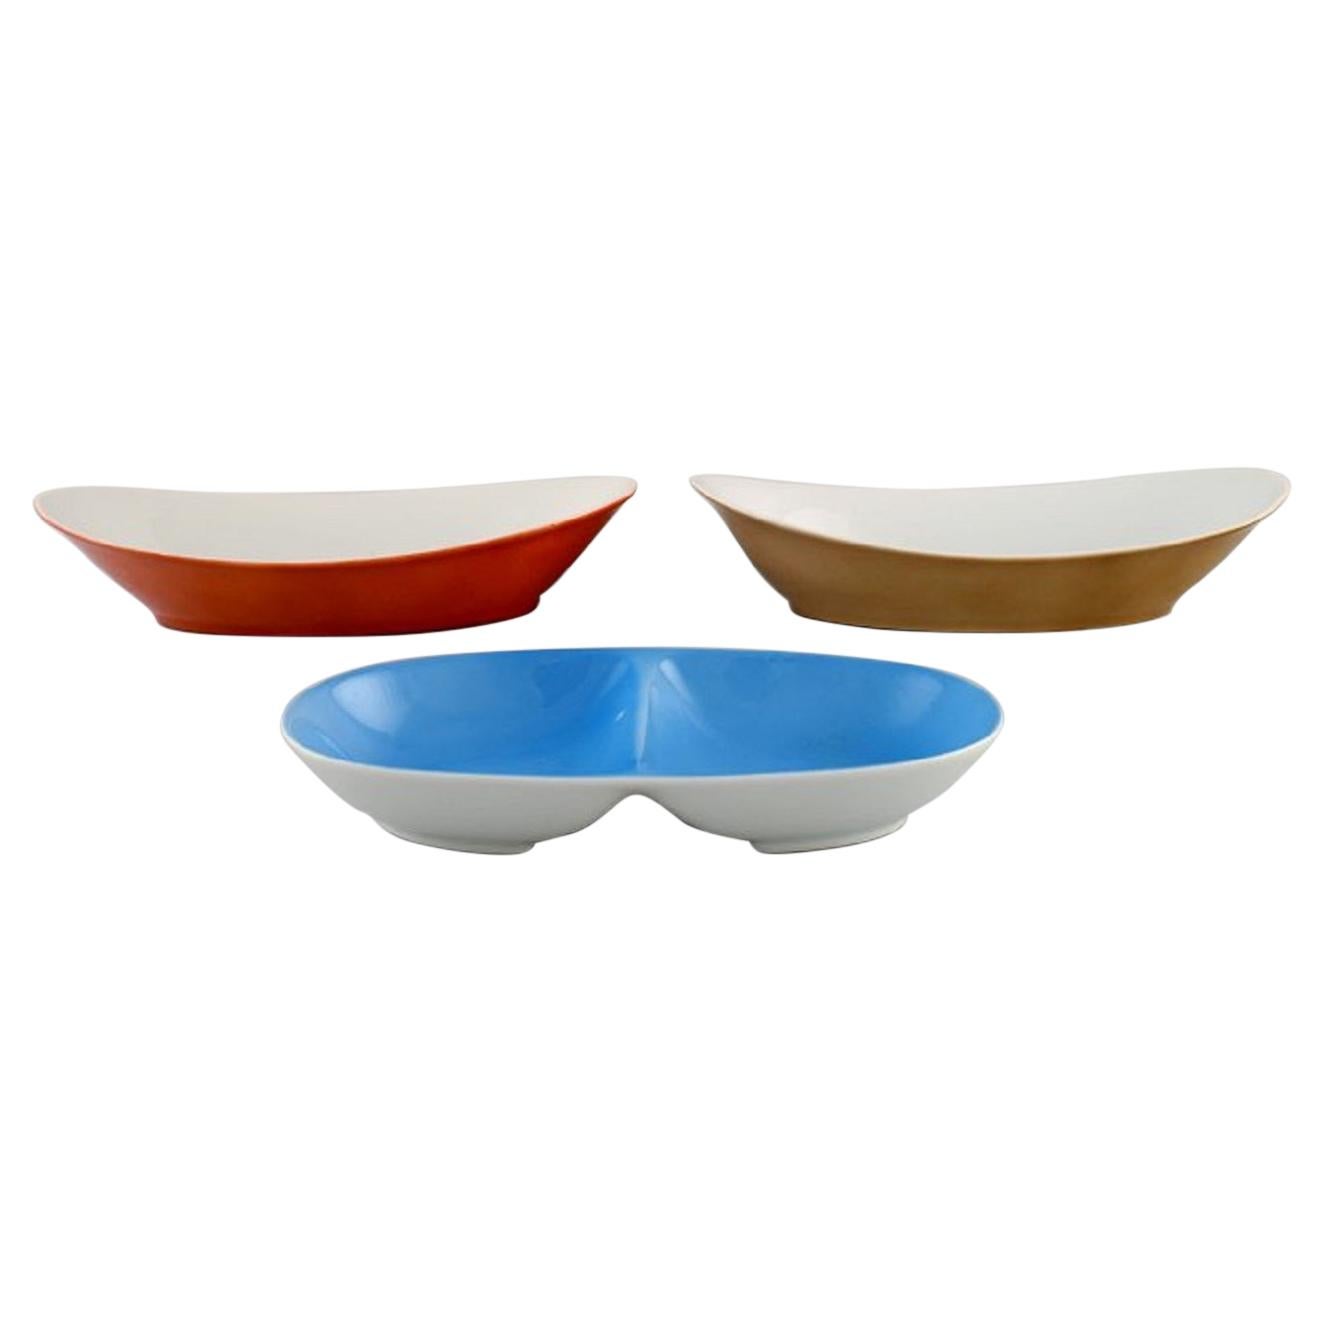 Kenji Fujita for Tackett Associates, Three Bowls in Porcelain, Dated 1953-56 For Sale